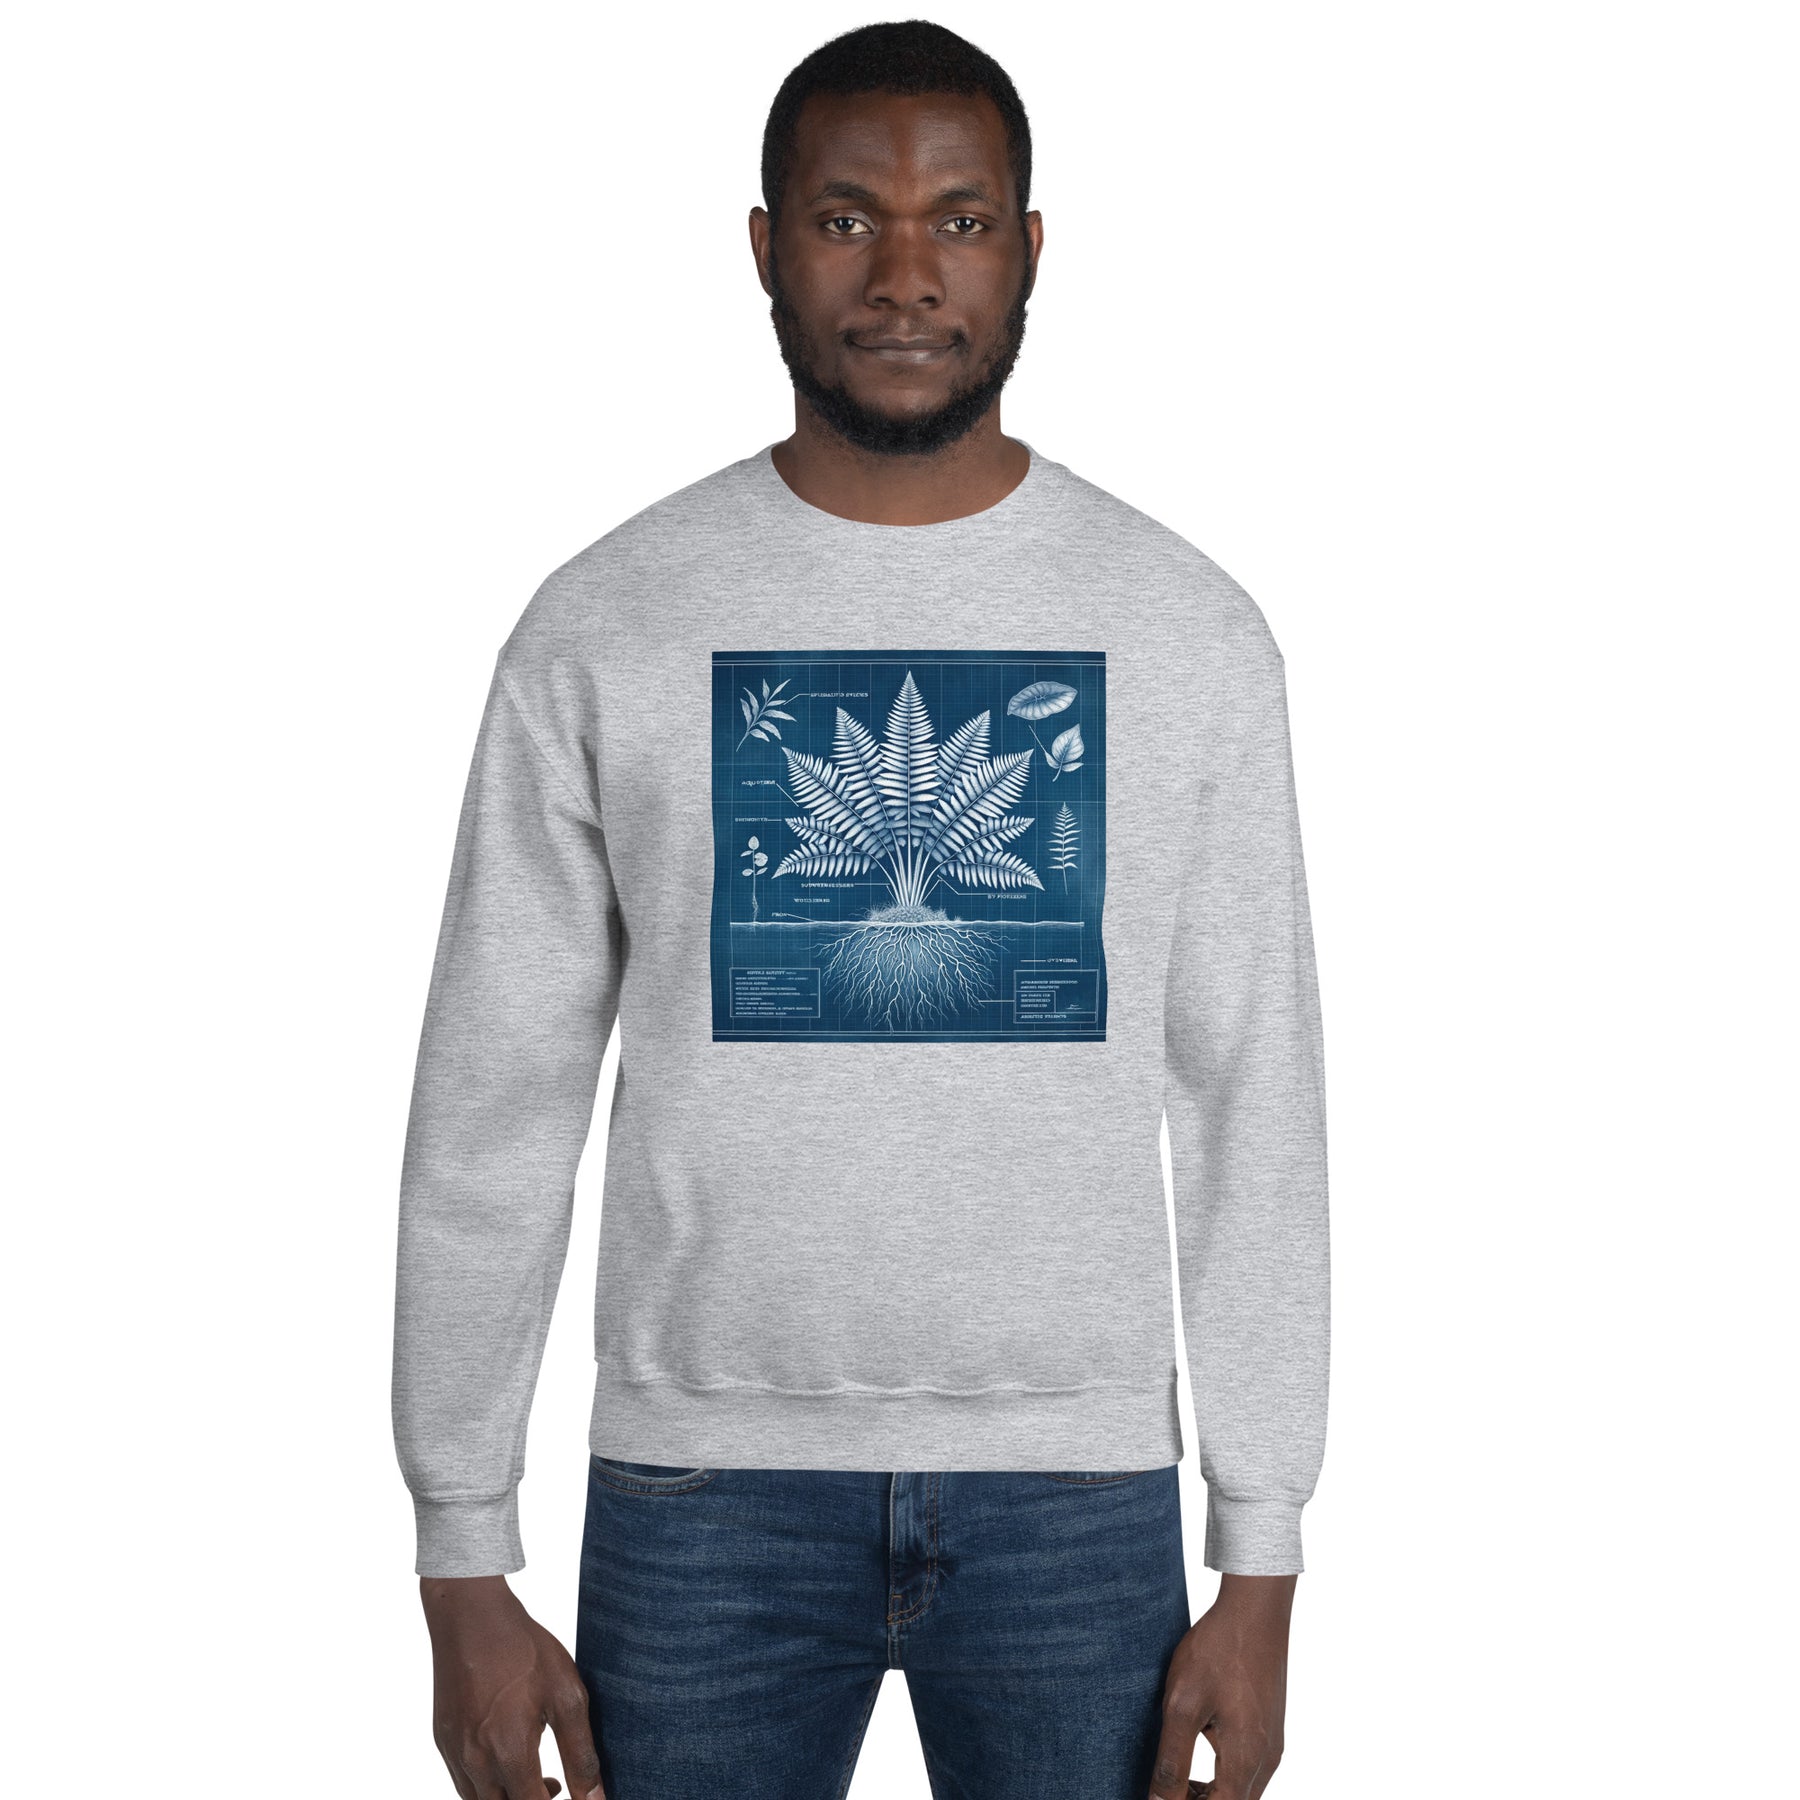 Aquafern | Unisex Sweatshirt